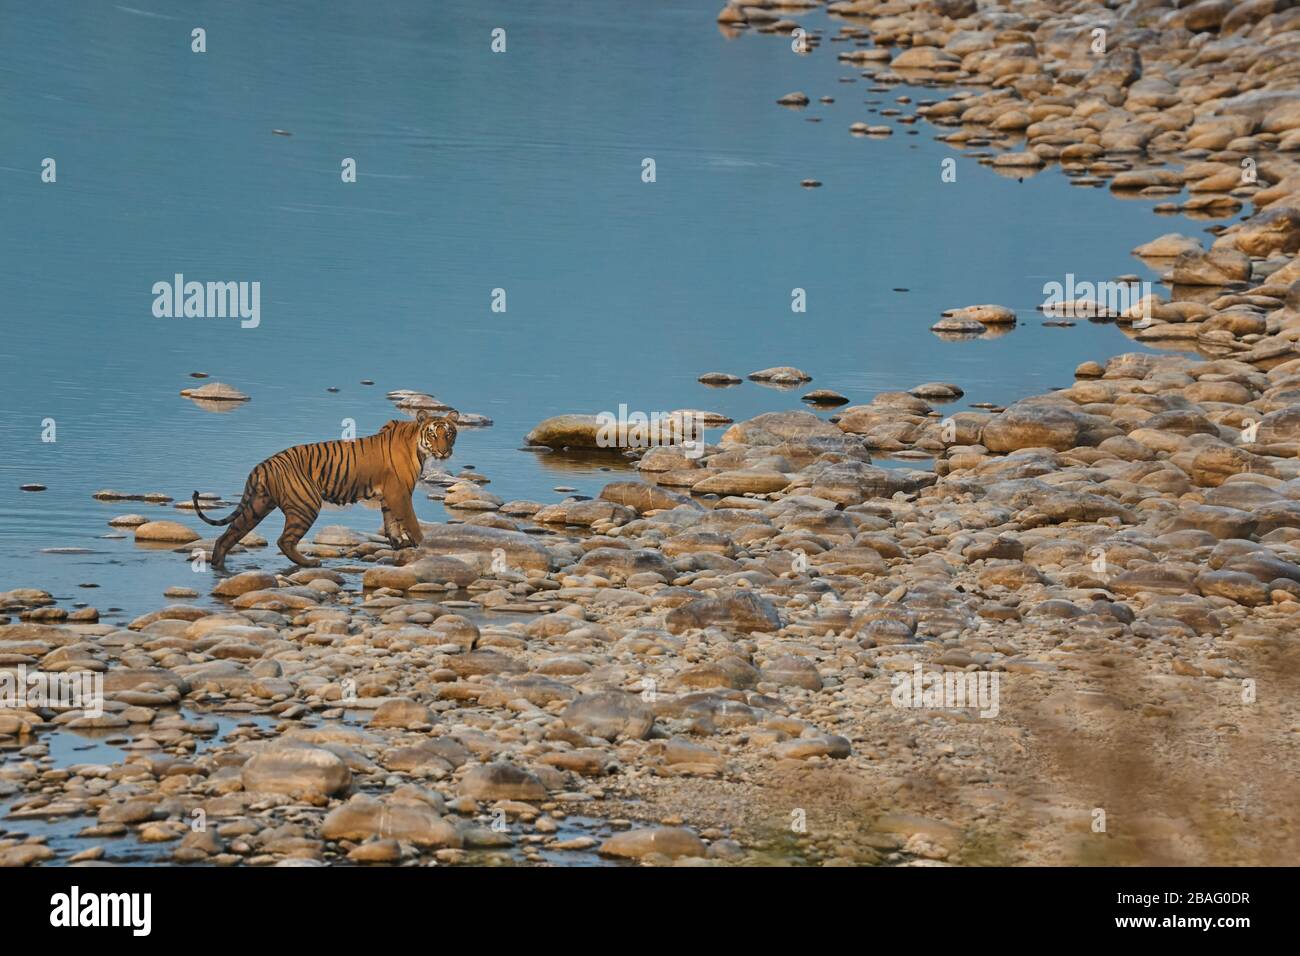 Le tigre sauvage masculin se prowling à Jim corbett Forest, Inde. Banque D'Images